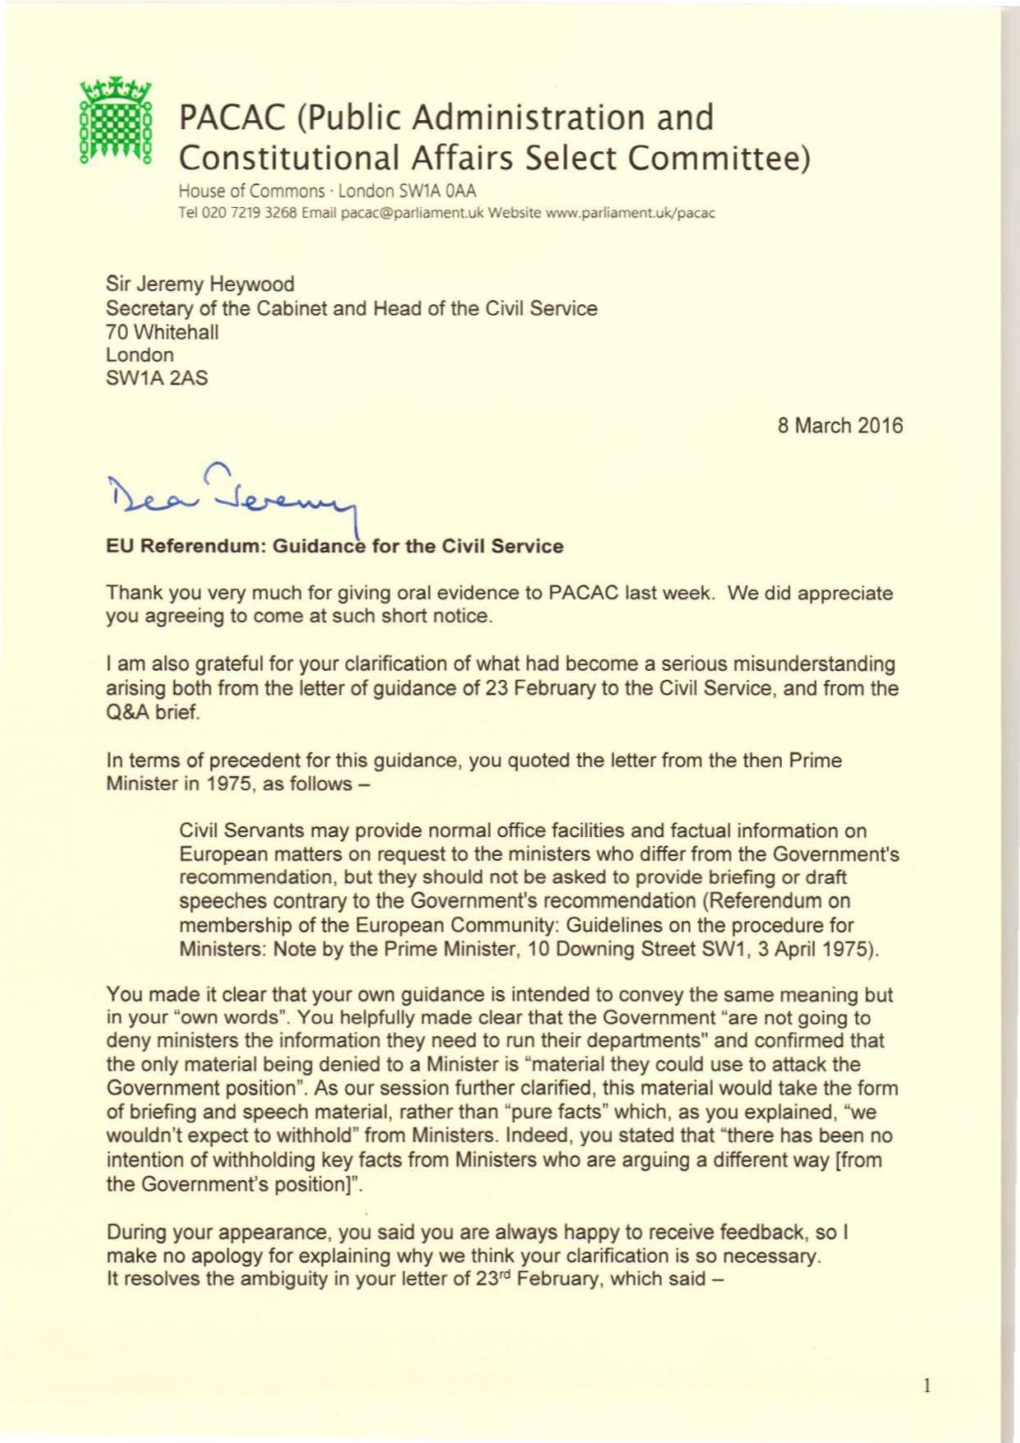 Letter from Bernard Jenkin MP to Sir Jeremy Heywood